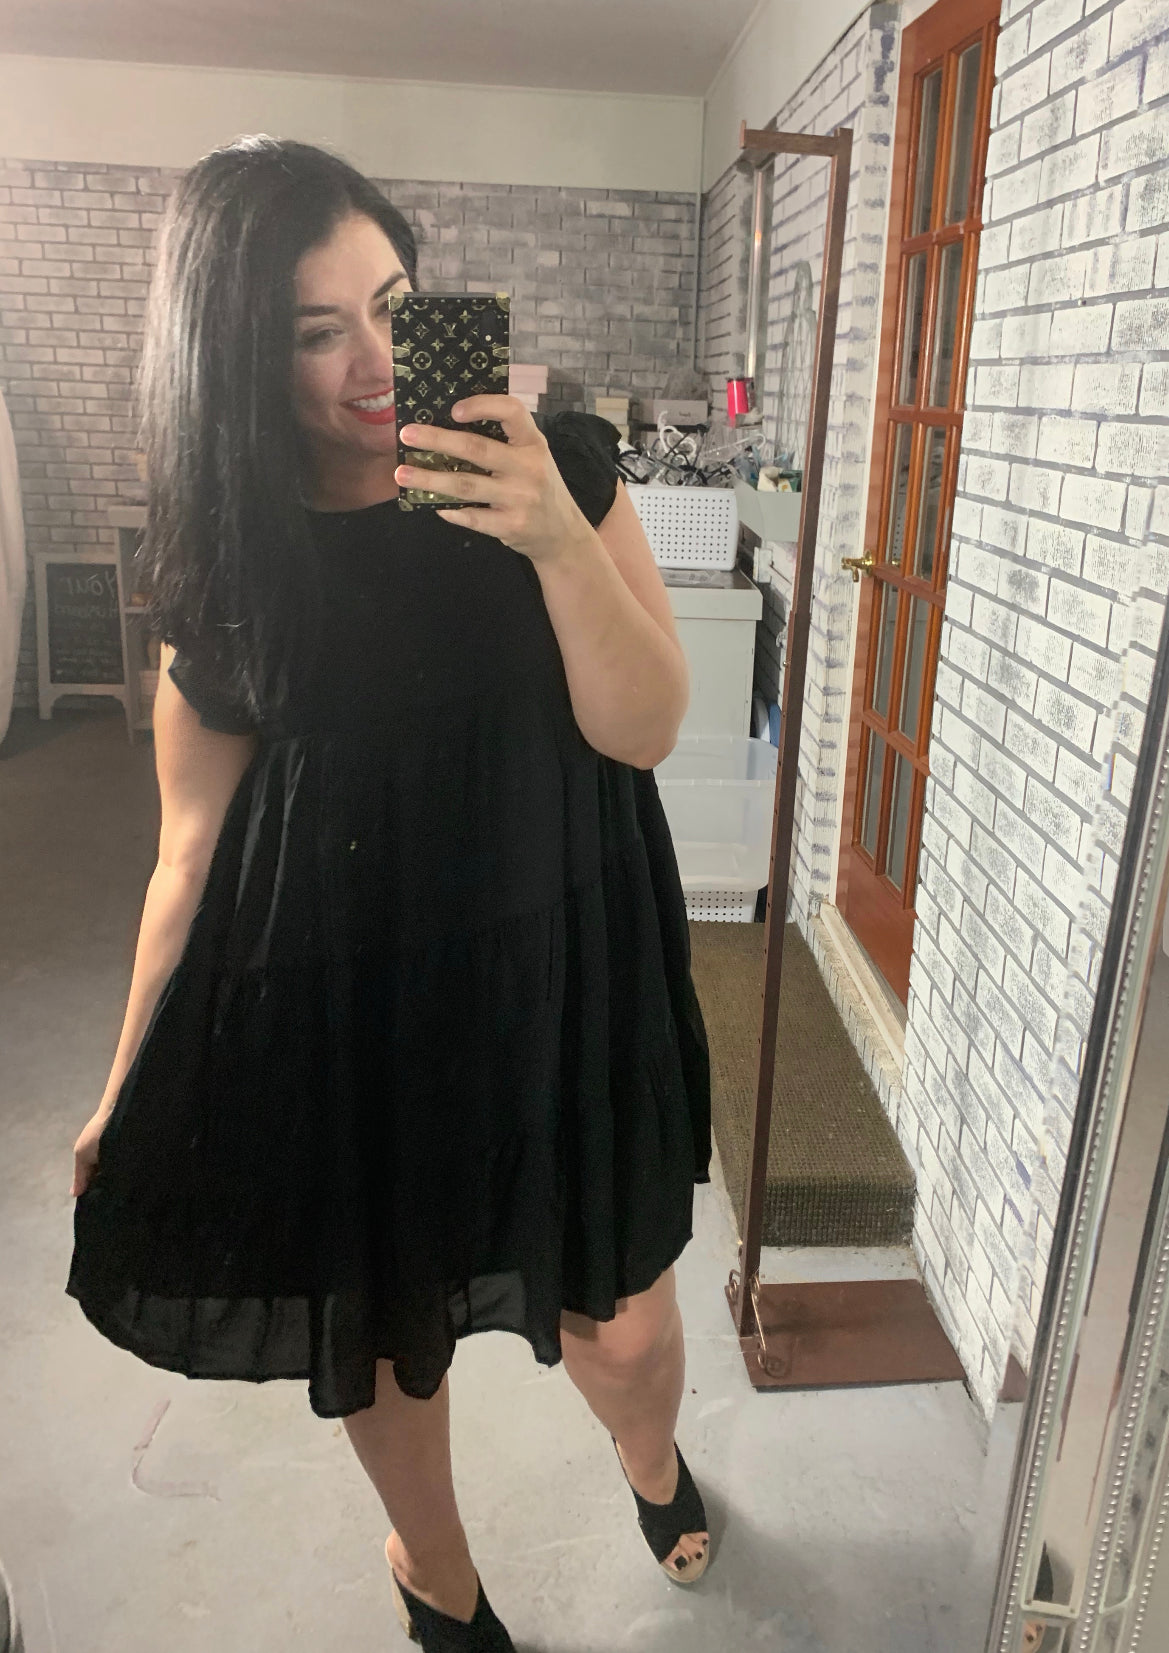 That black dress